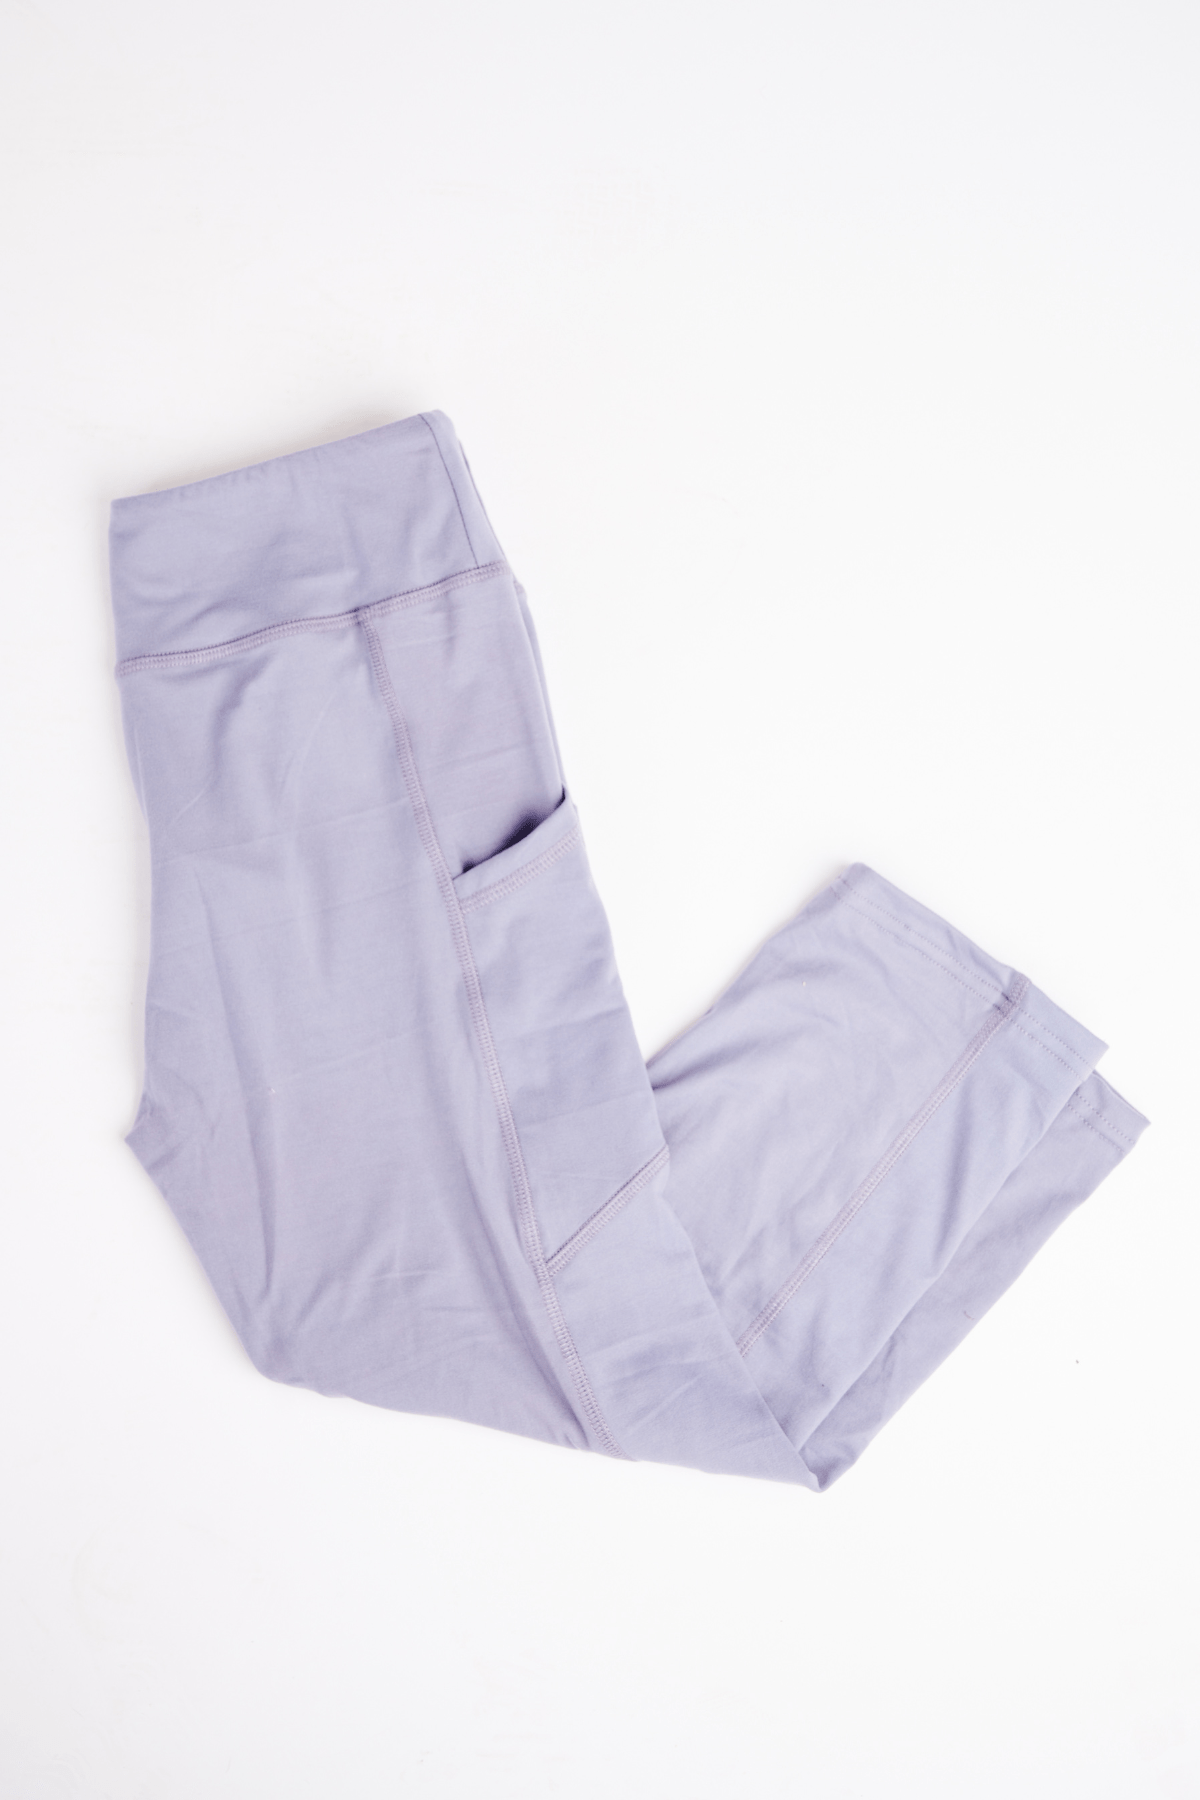 oolala Capri Solid Capri with Pockets 🦋 oolala ButterflySoft™ | Solid Capri with Pockets Women's Leggings